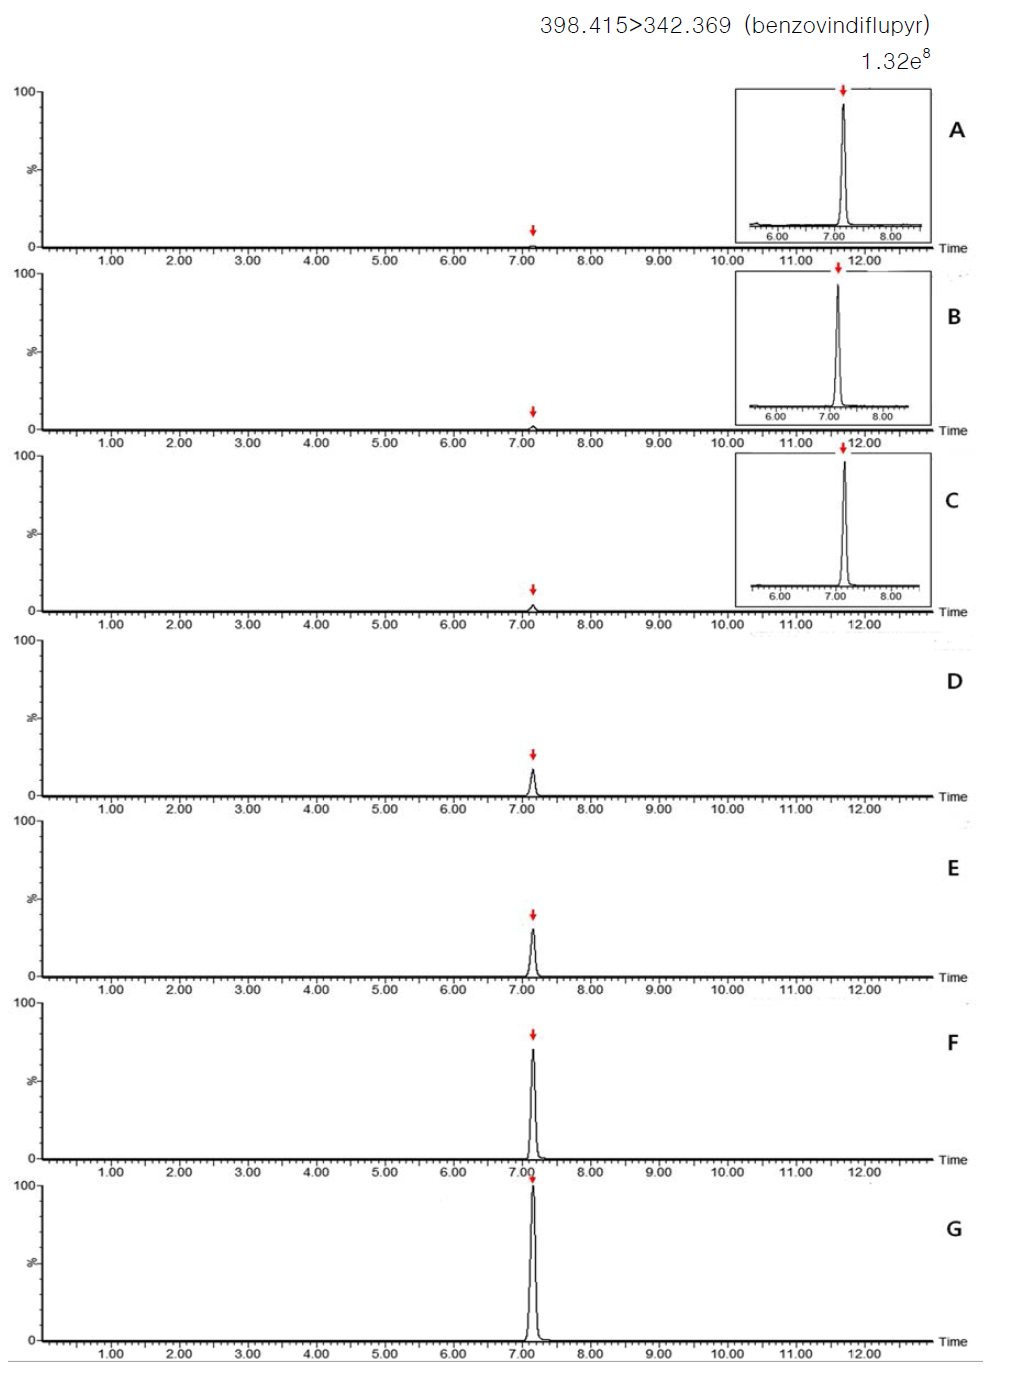 LC-MS/MS chromatograms of benzovindiflupyr standard in mandarin matrix (A) 0.001 mg/kg, (B) 0.005 mg/kg, (C) 0.01 mg/kg, (D) 0.05 mg/kg, (E) 0.1 mg/kg, (F) 0.25 mg/kg and (G) 0.5 mg/kg